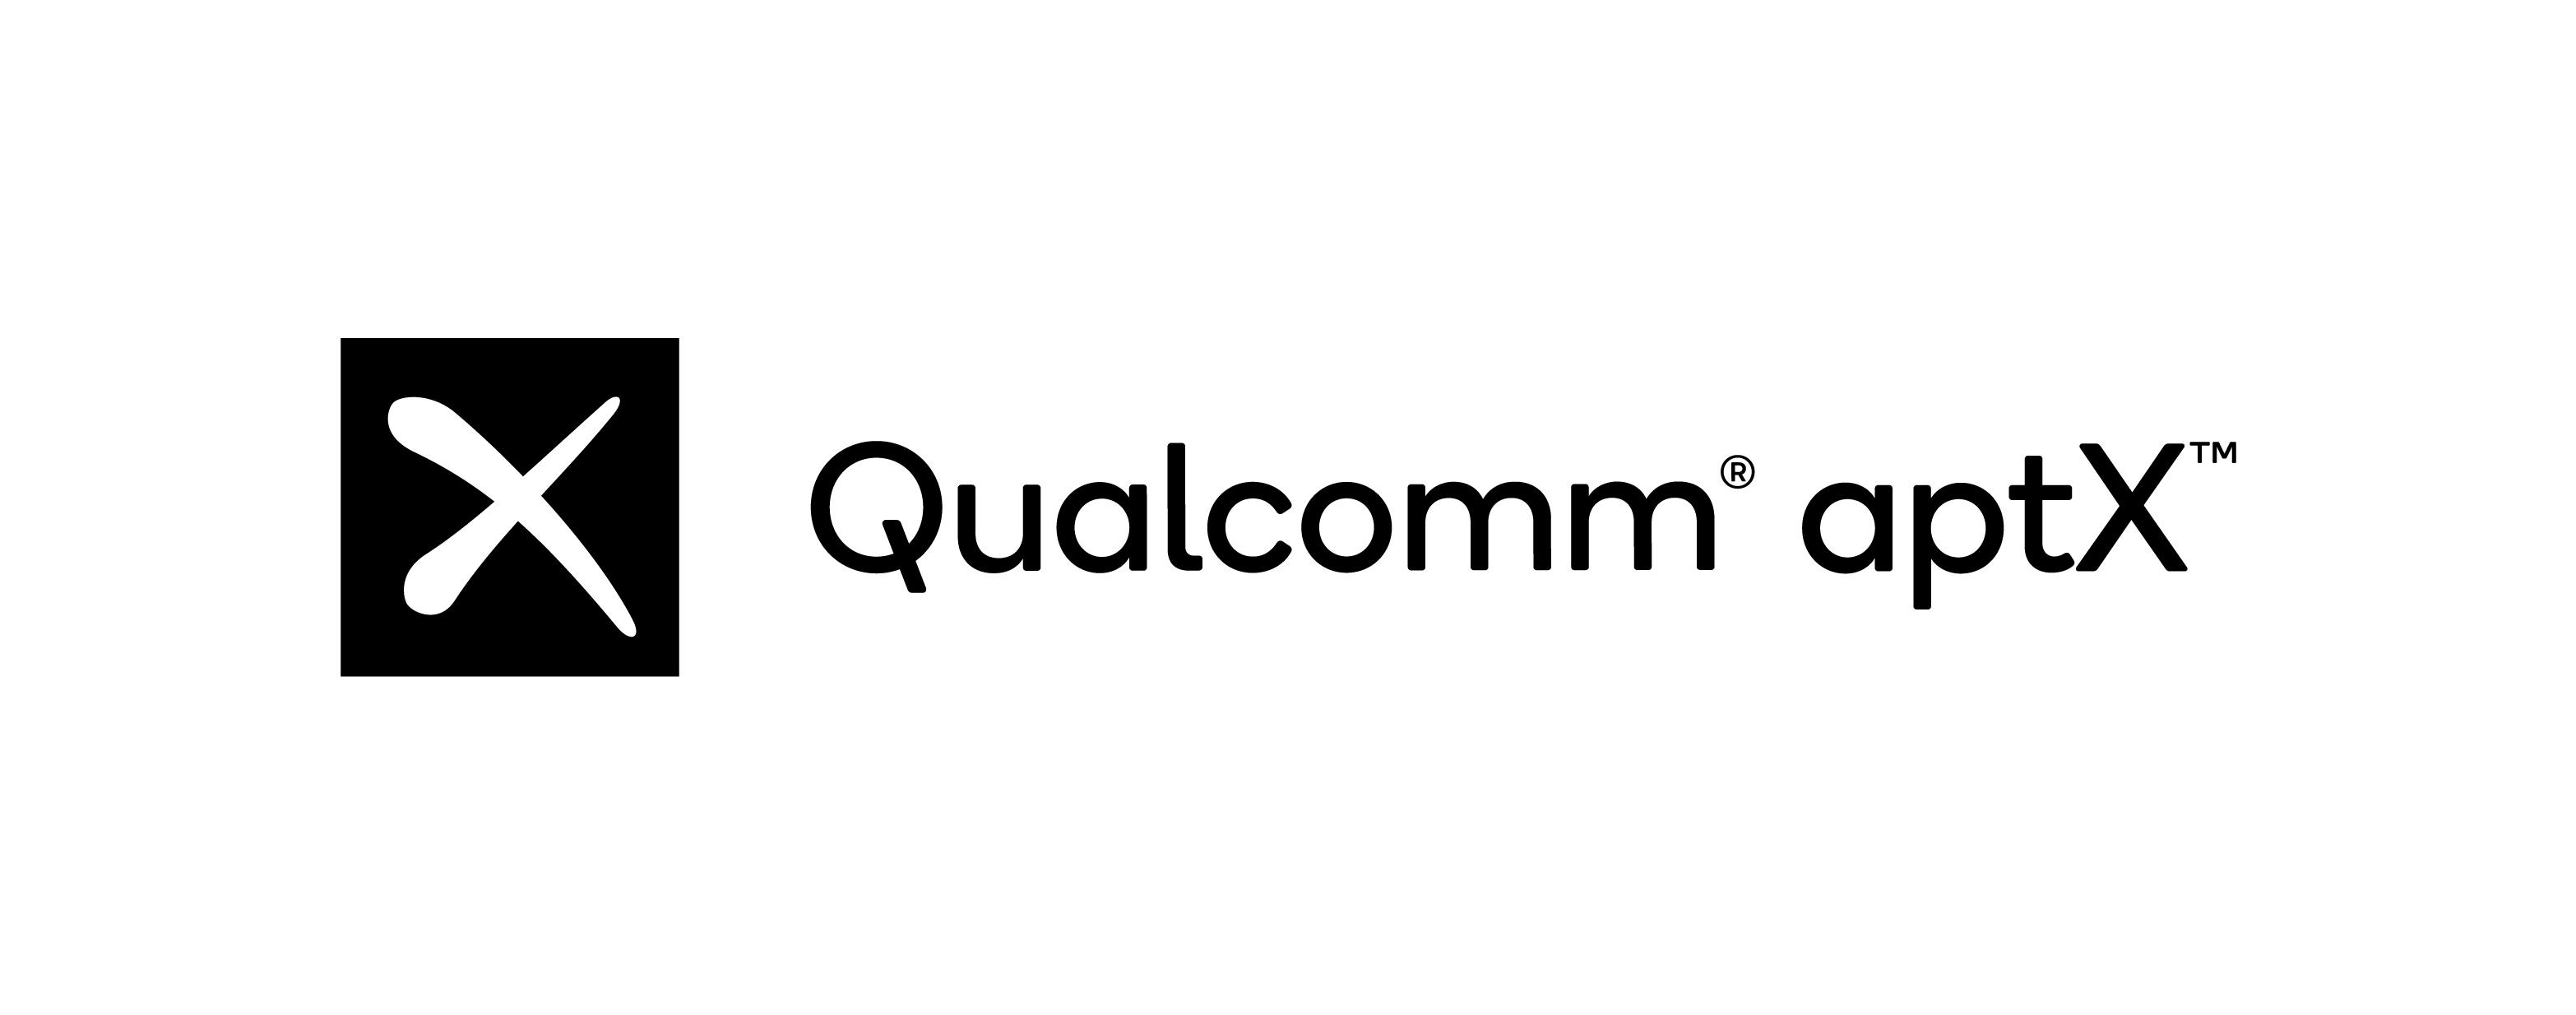 Bluetoothオーディオの品質向上に貢献するQualcomm® aptX™ - 半導体事業 - マクニカ